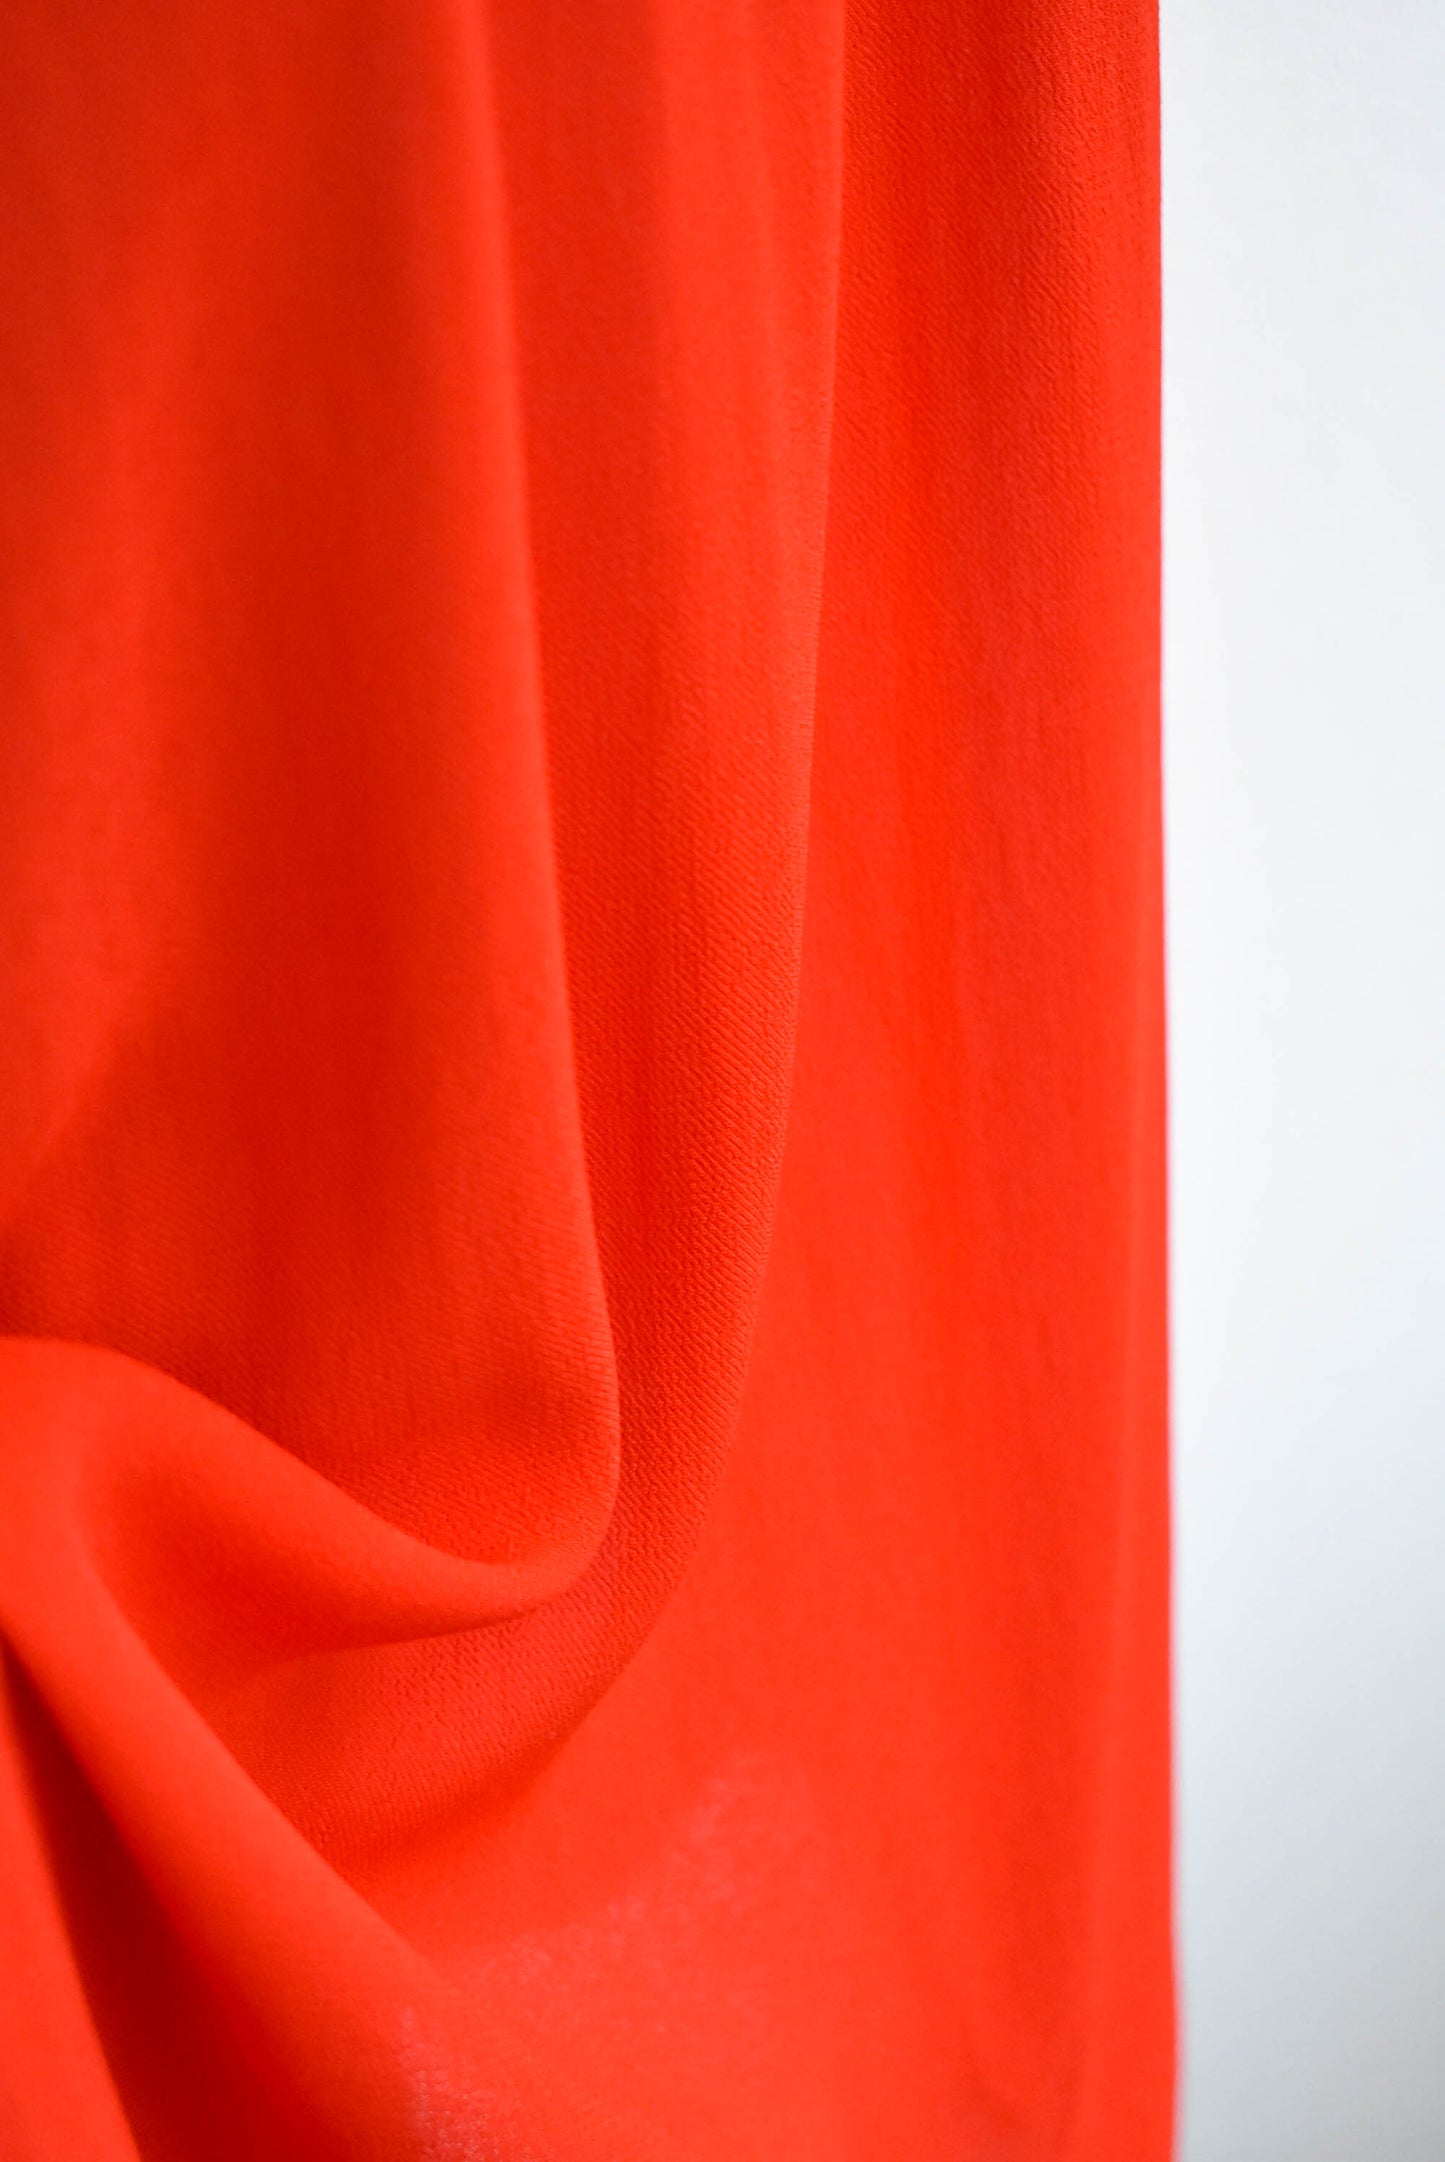 Ricochet siren red sheer tunic dress, size X Small